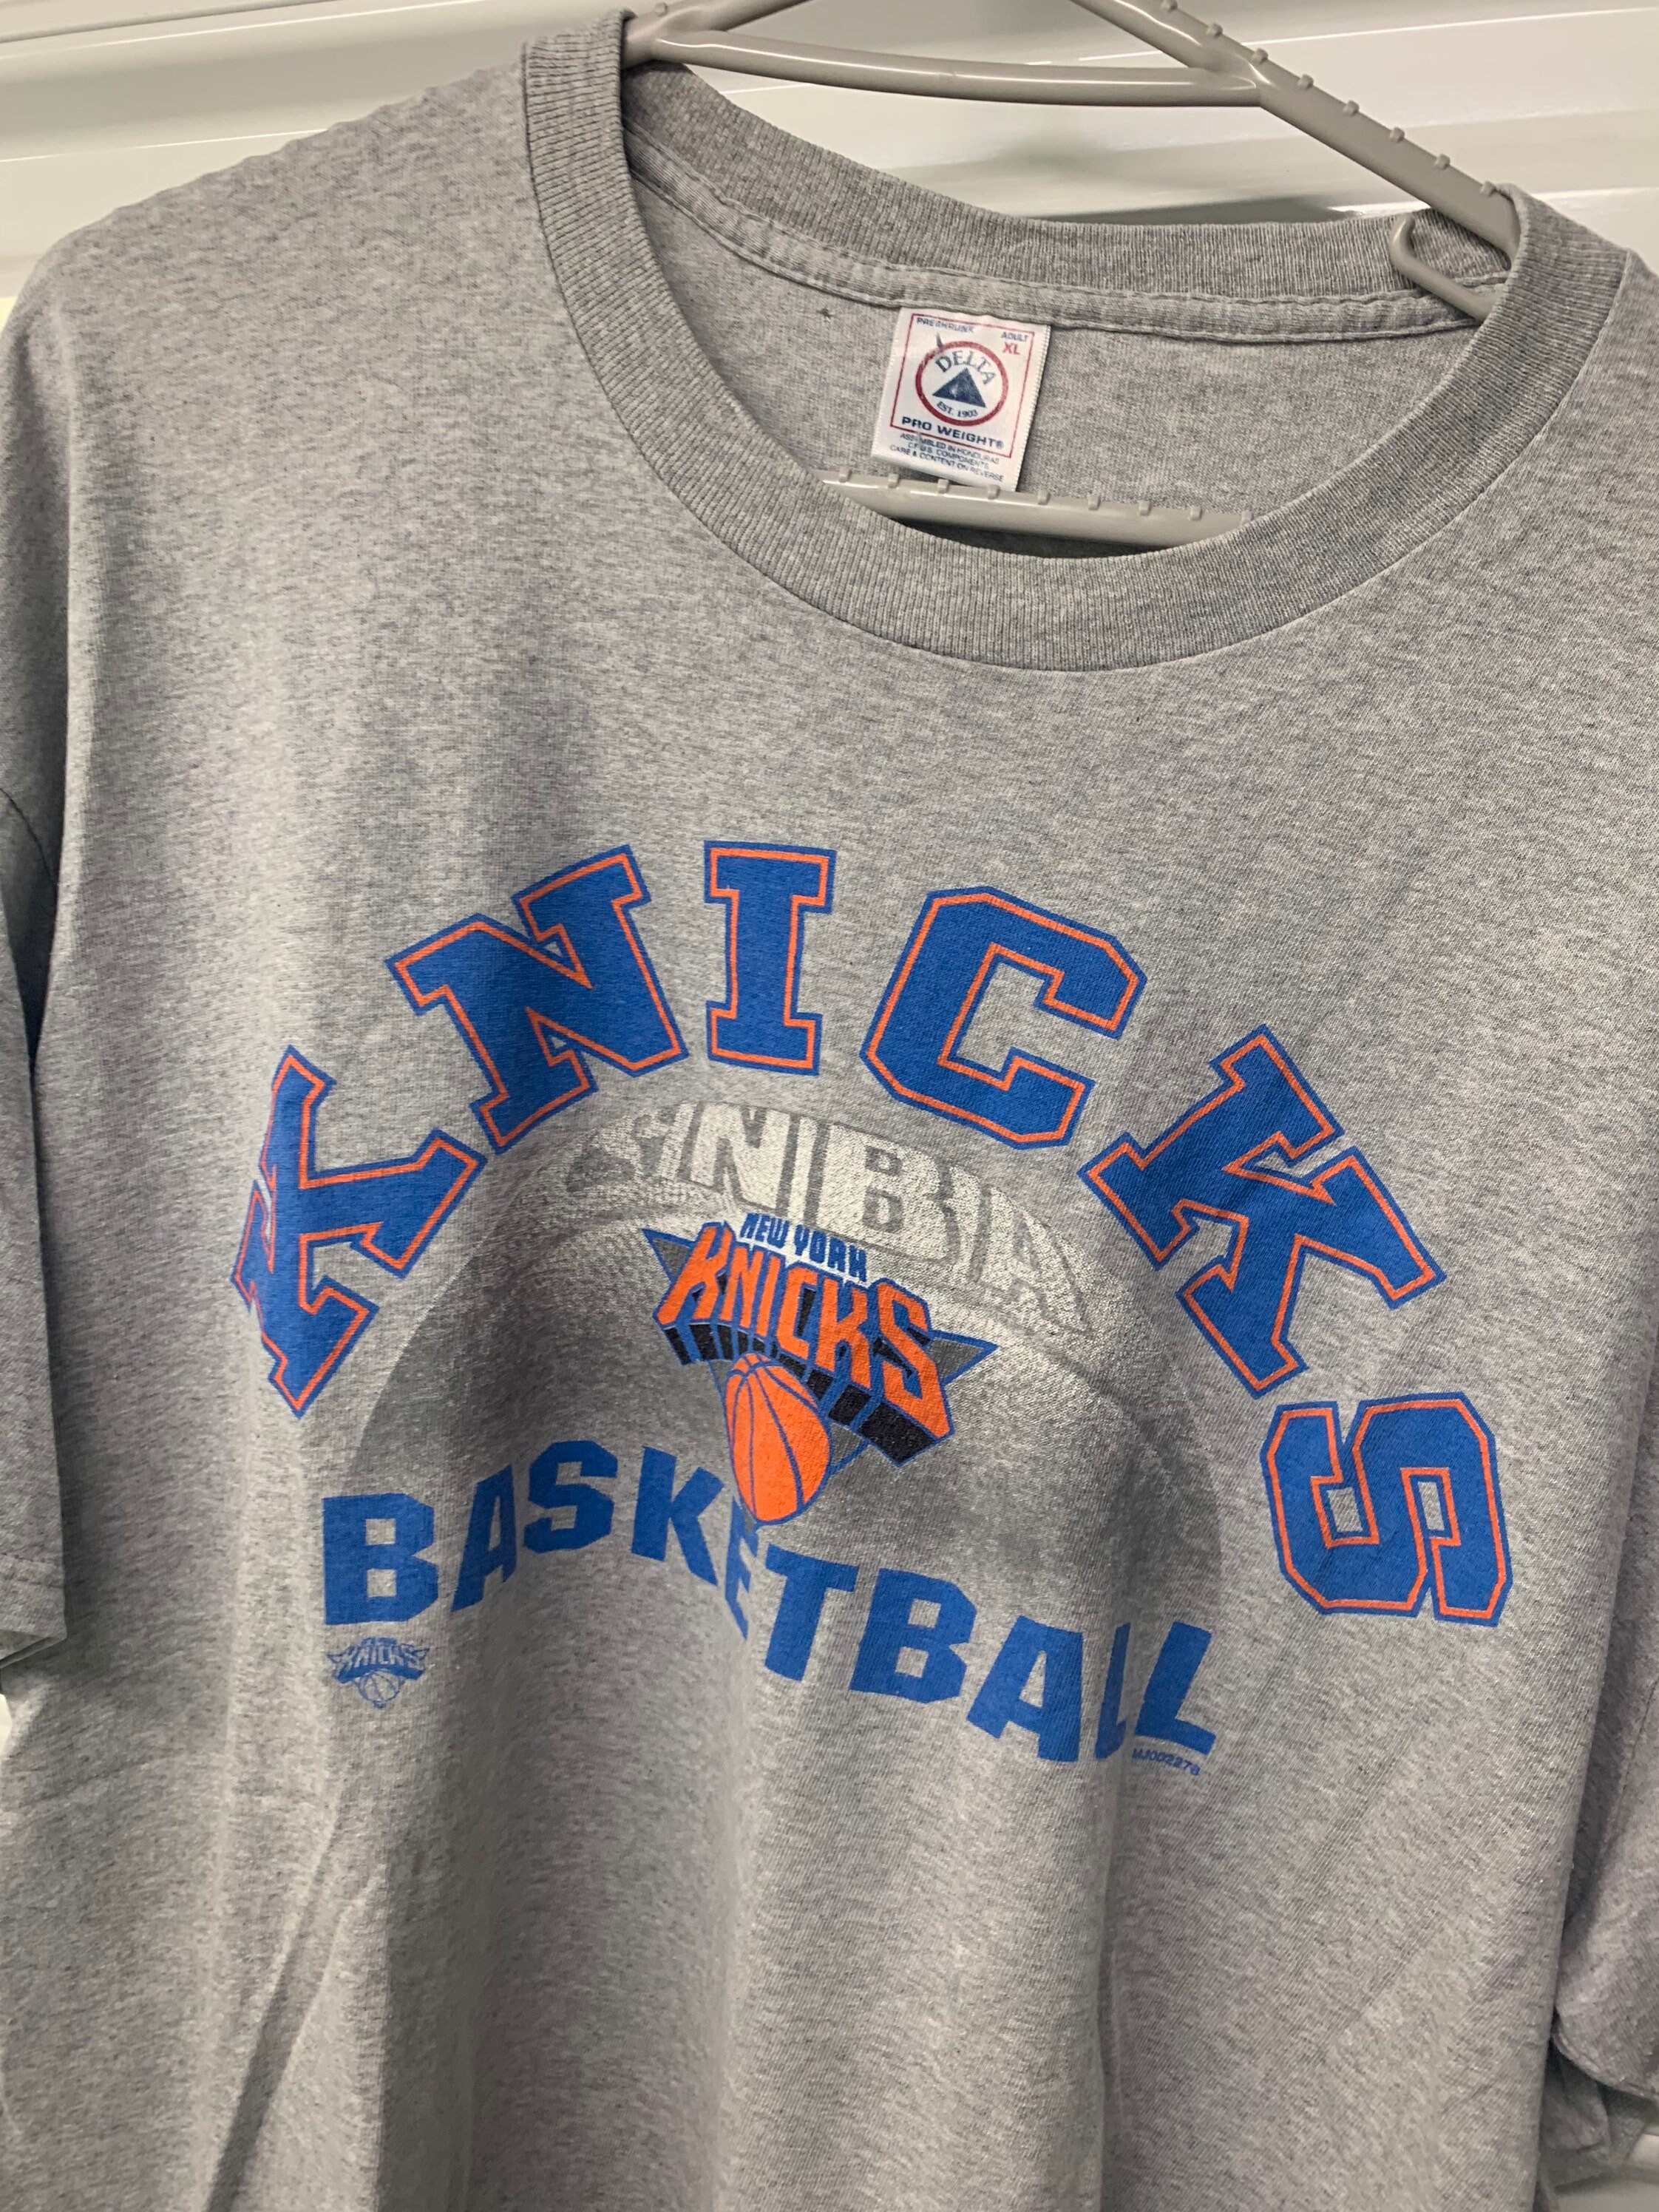 Vintage 90s New York Knicks Champion T-shirt Mens Size Large 